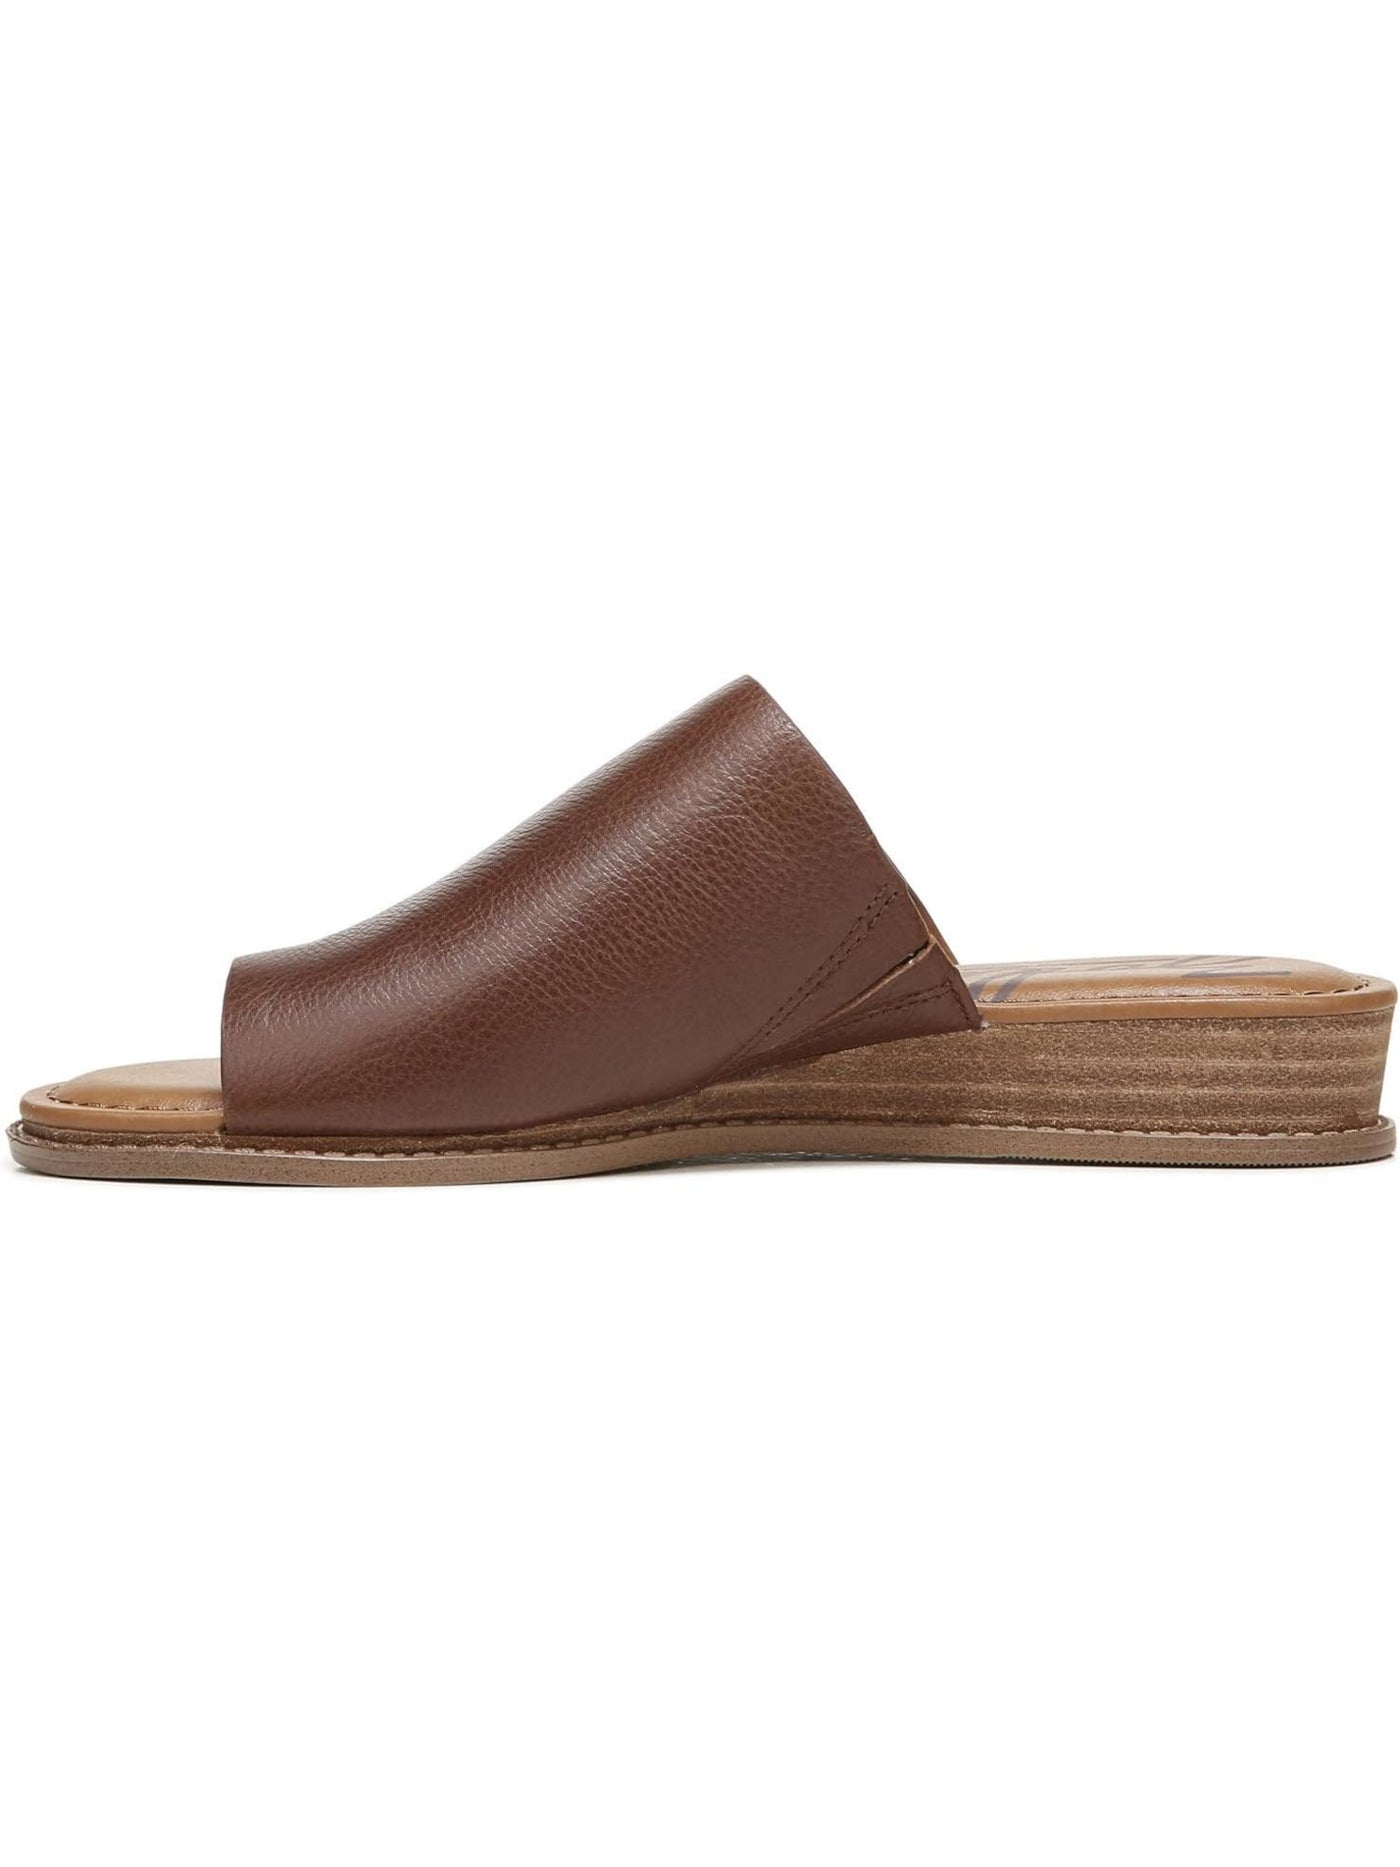 ZODIAC Womens Brown Toe Loop Giada Round Toe Slip On Leather Sandals Shoes 10 M